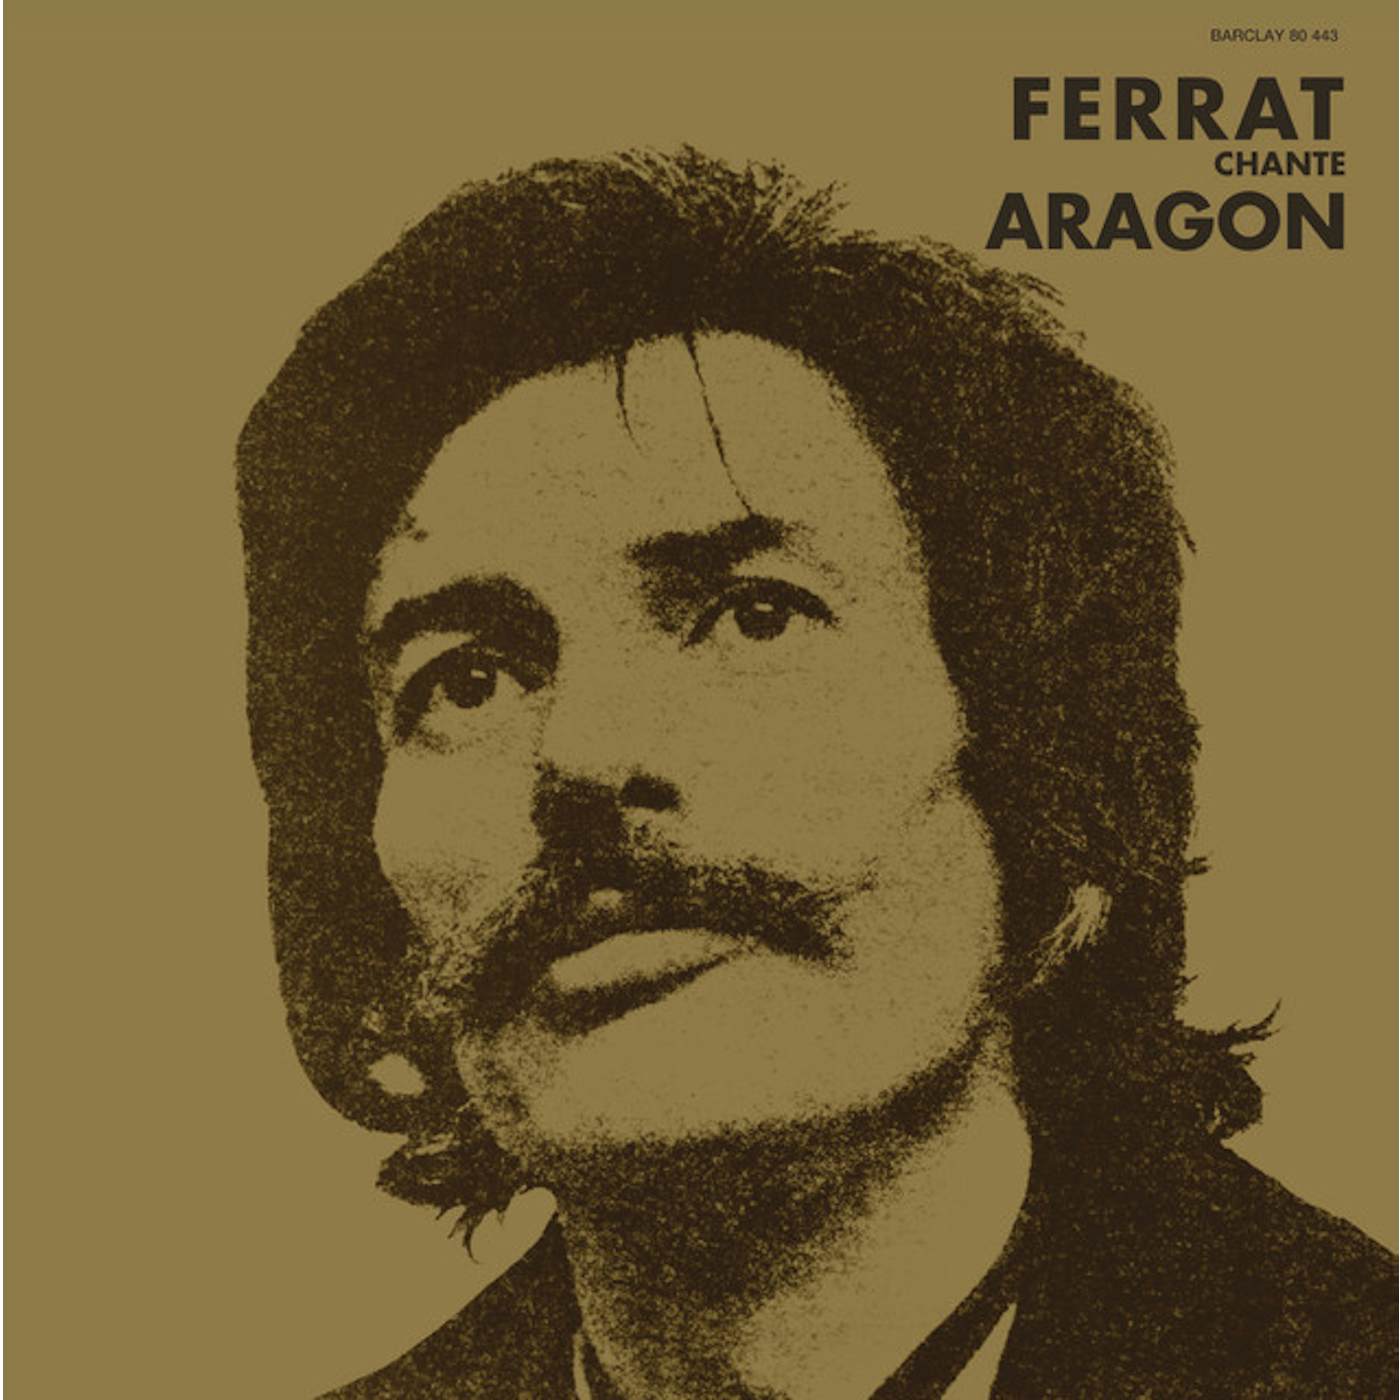 Jean Ferrat Ferrat Chante Aragon Vinyl Record